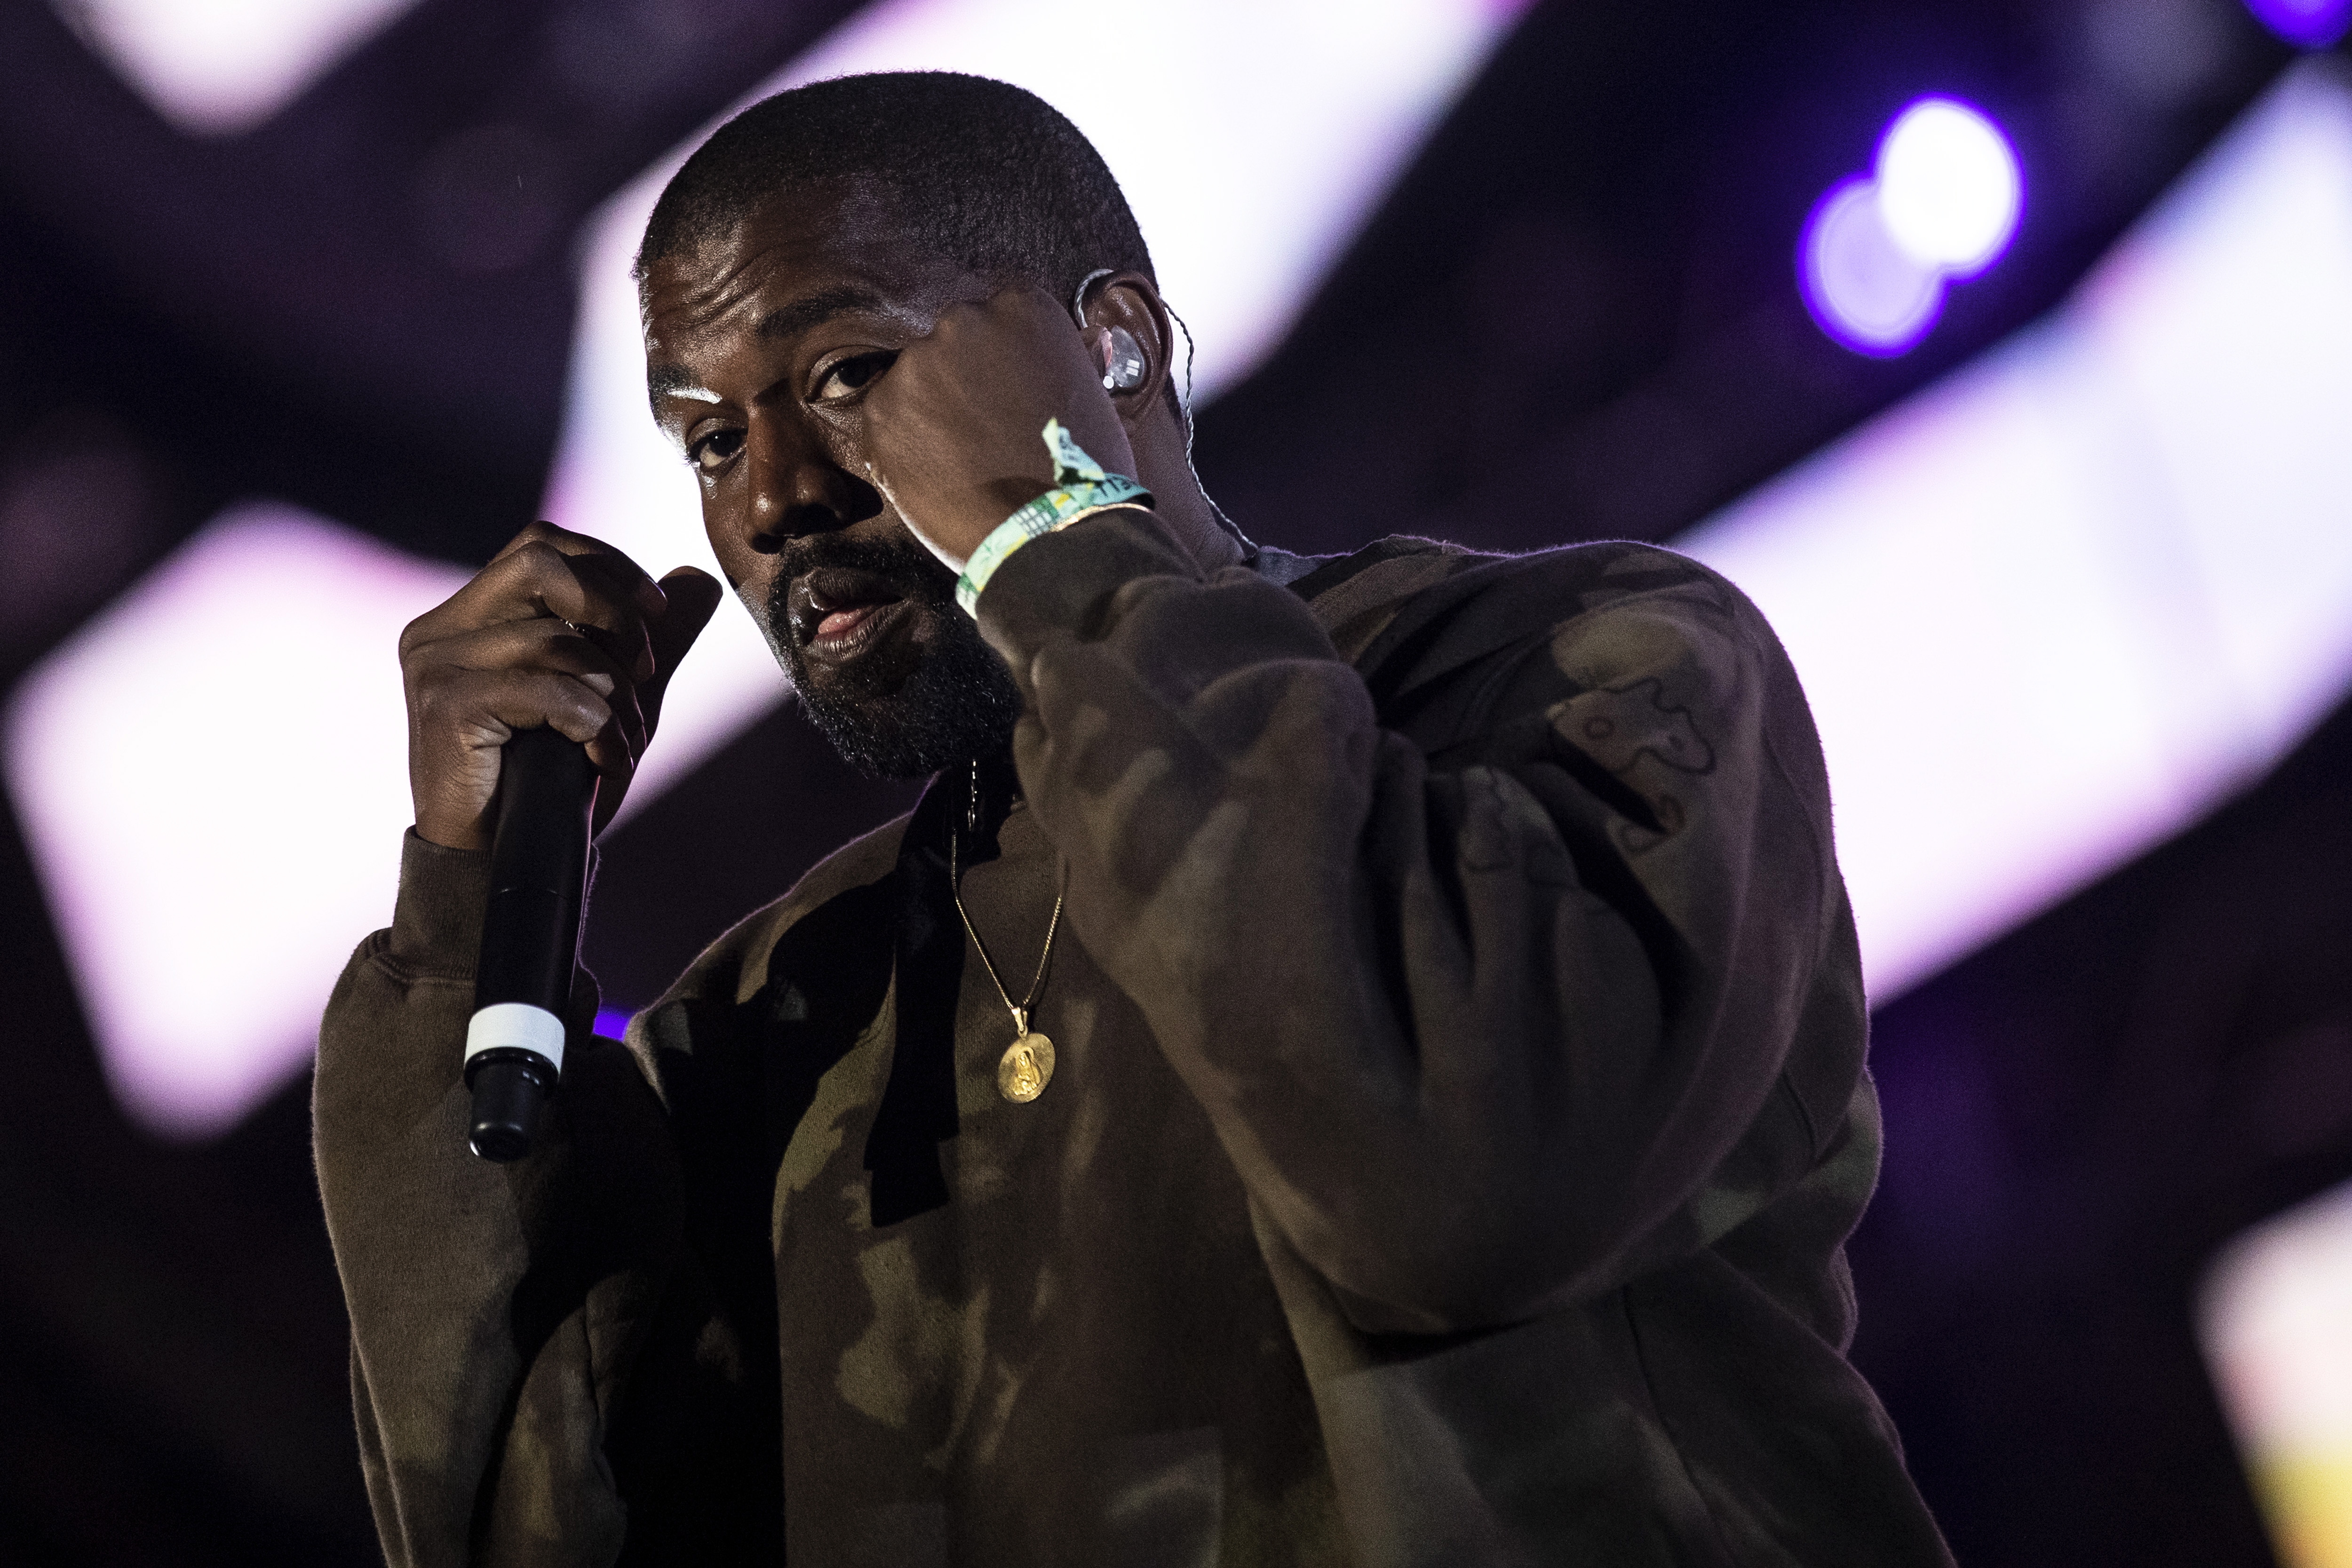 En la imagen, el rapero estadounidense Kanye West. EFE/Etienne Laurent/Archivo
